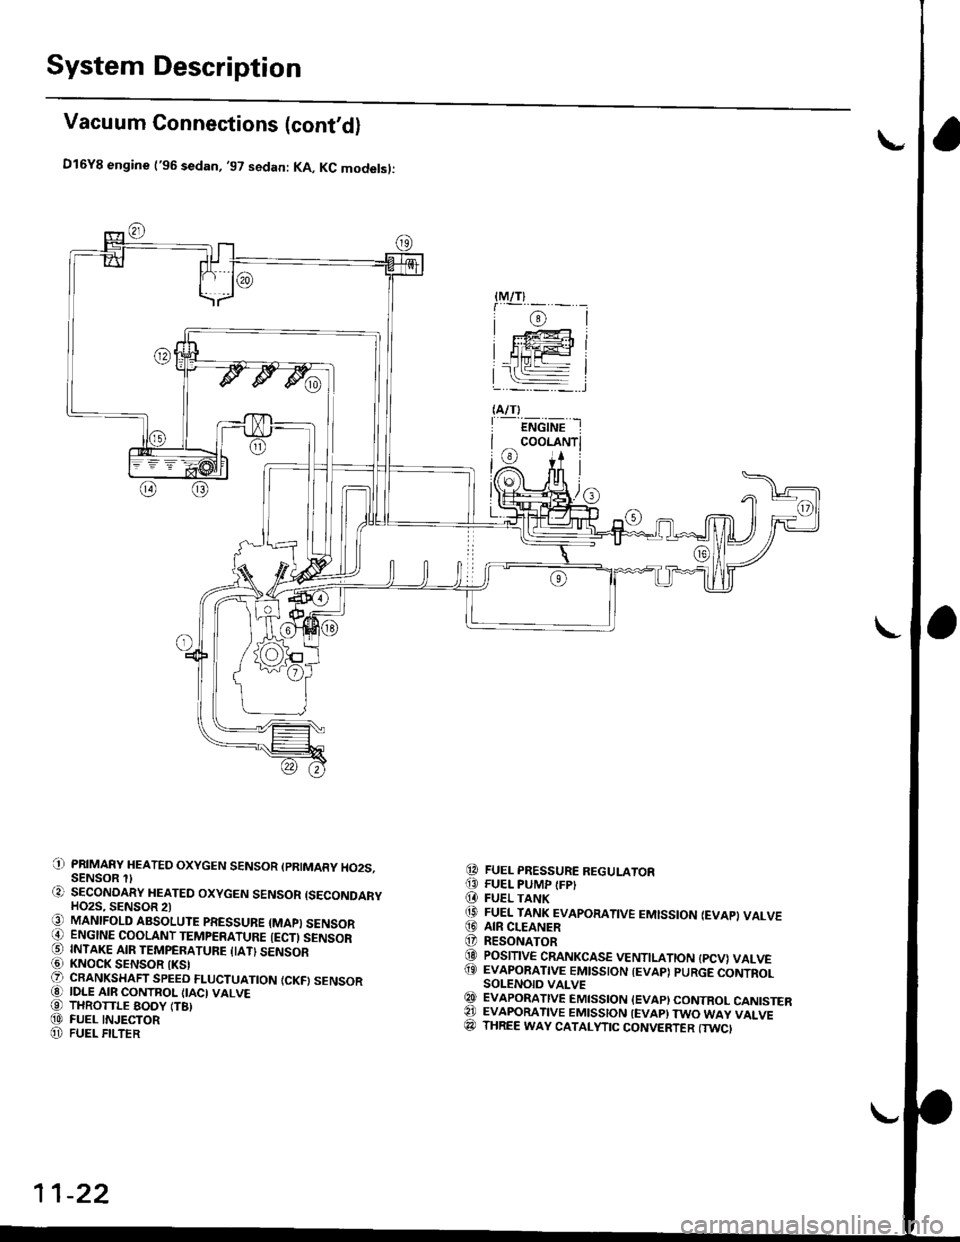 HONDA CIVIC 1997 6.G Owners Manual System Description
Vacuum Connections (contd)
D16Y8 engine (96 sedan, 97 sedan: KA, KC modelsl:
PRIMARY HEATED OXYGEN SENSOR (PRIMARY HO2S.SENSOR  SECONOARY HEATED OXYGEN SENSOR {SECONDARYHO2S, SEN